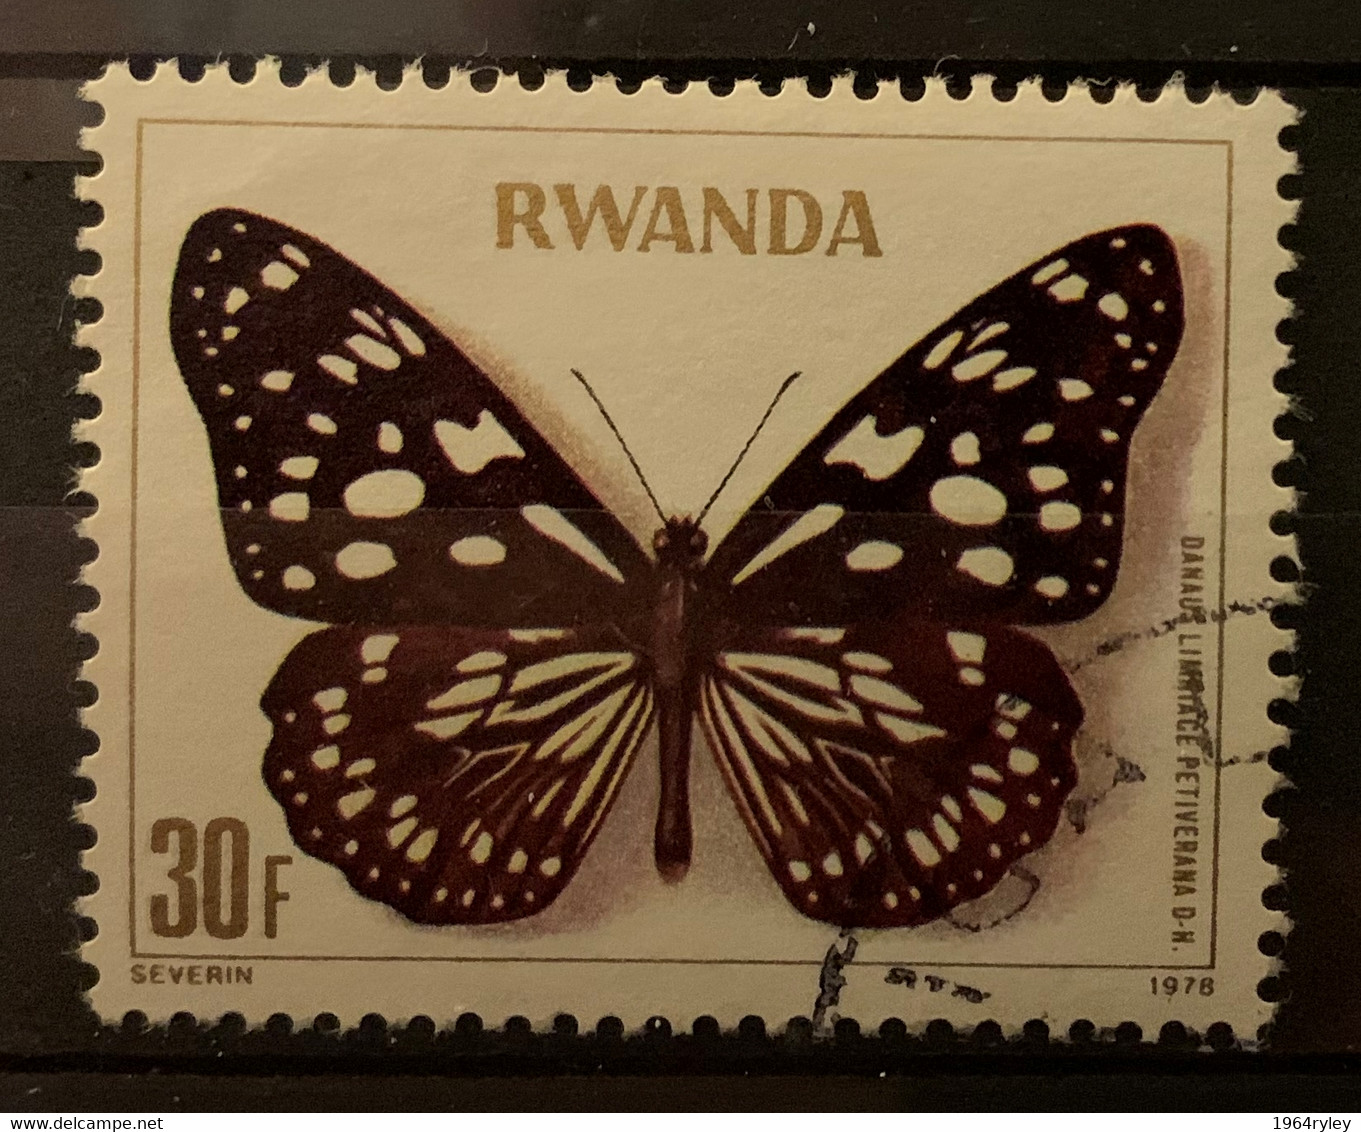 RWANDA  - (0)  - 1979 - # 906 - Usati